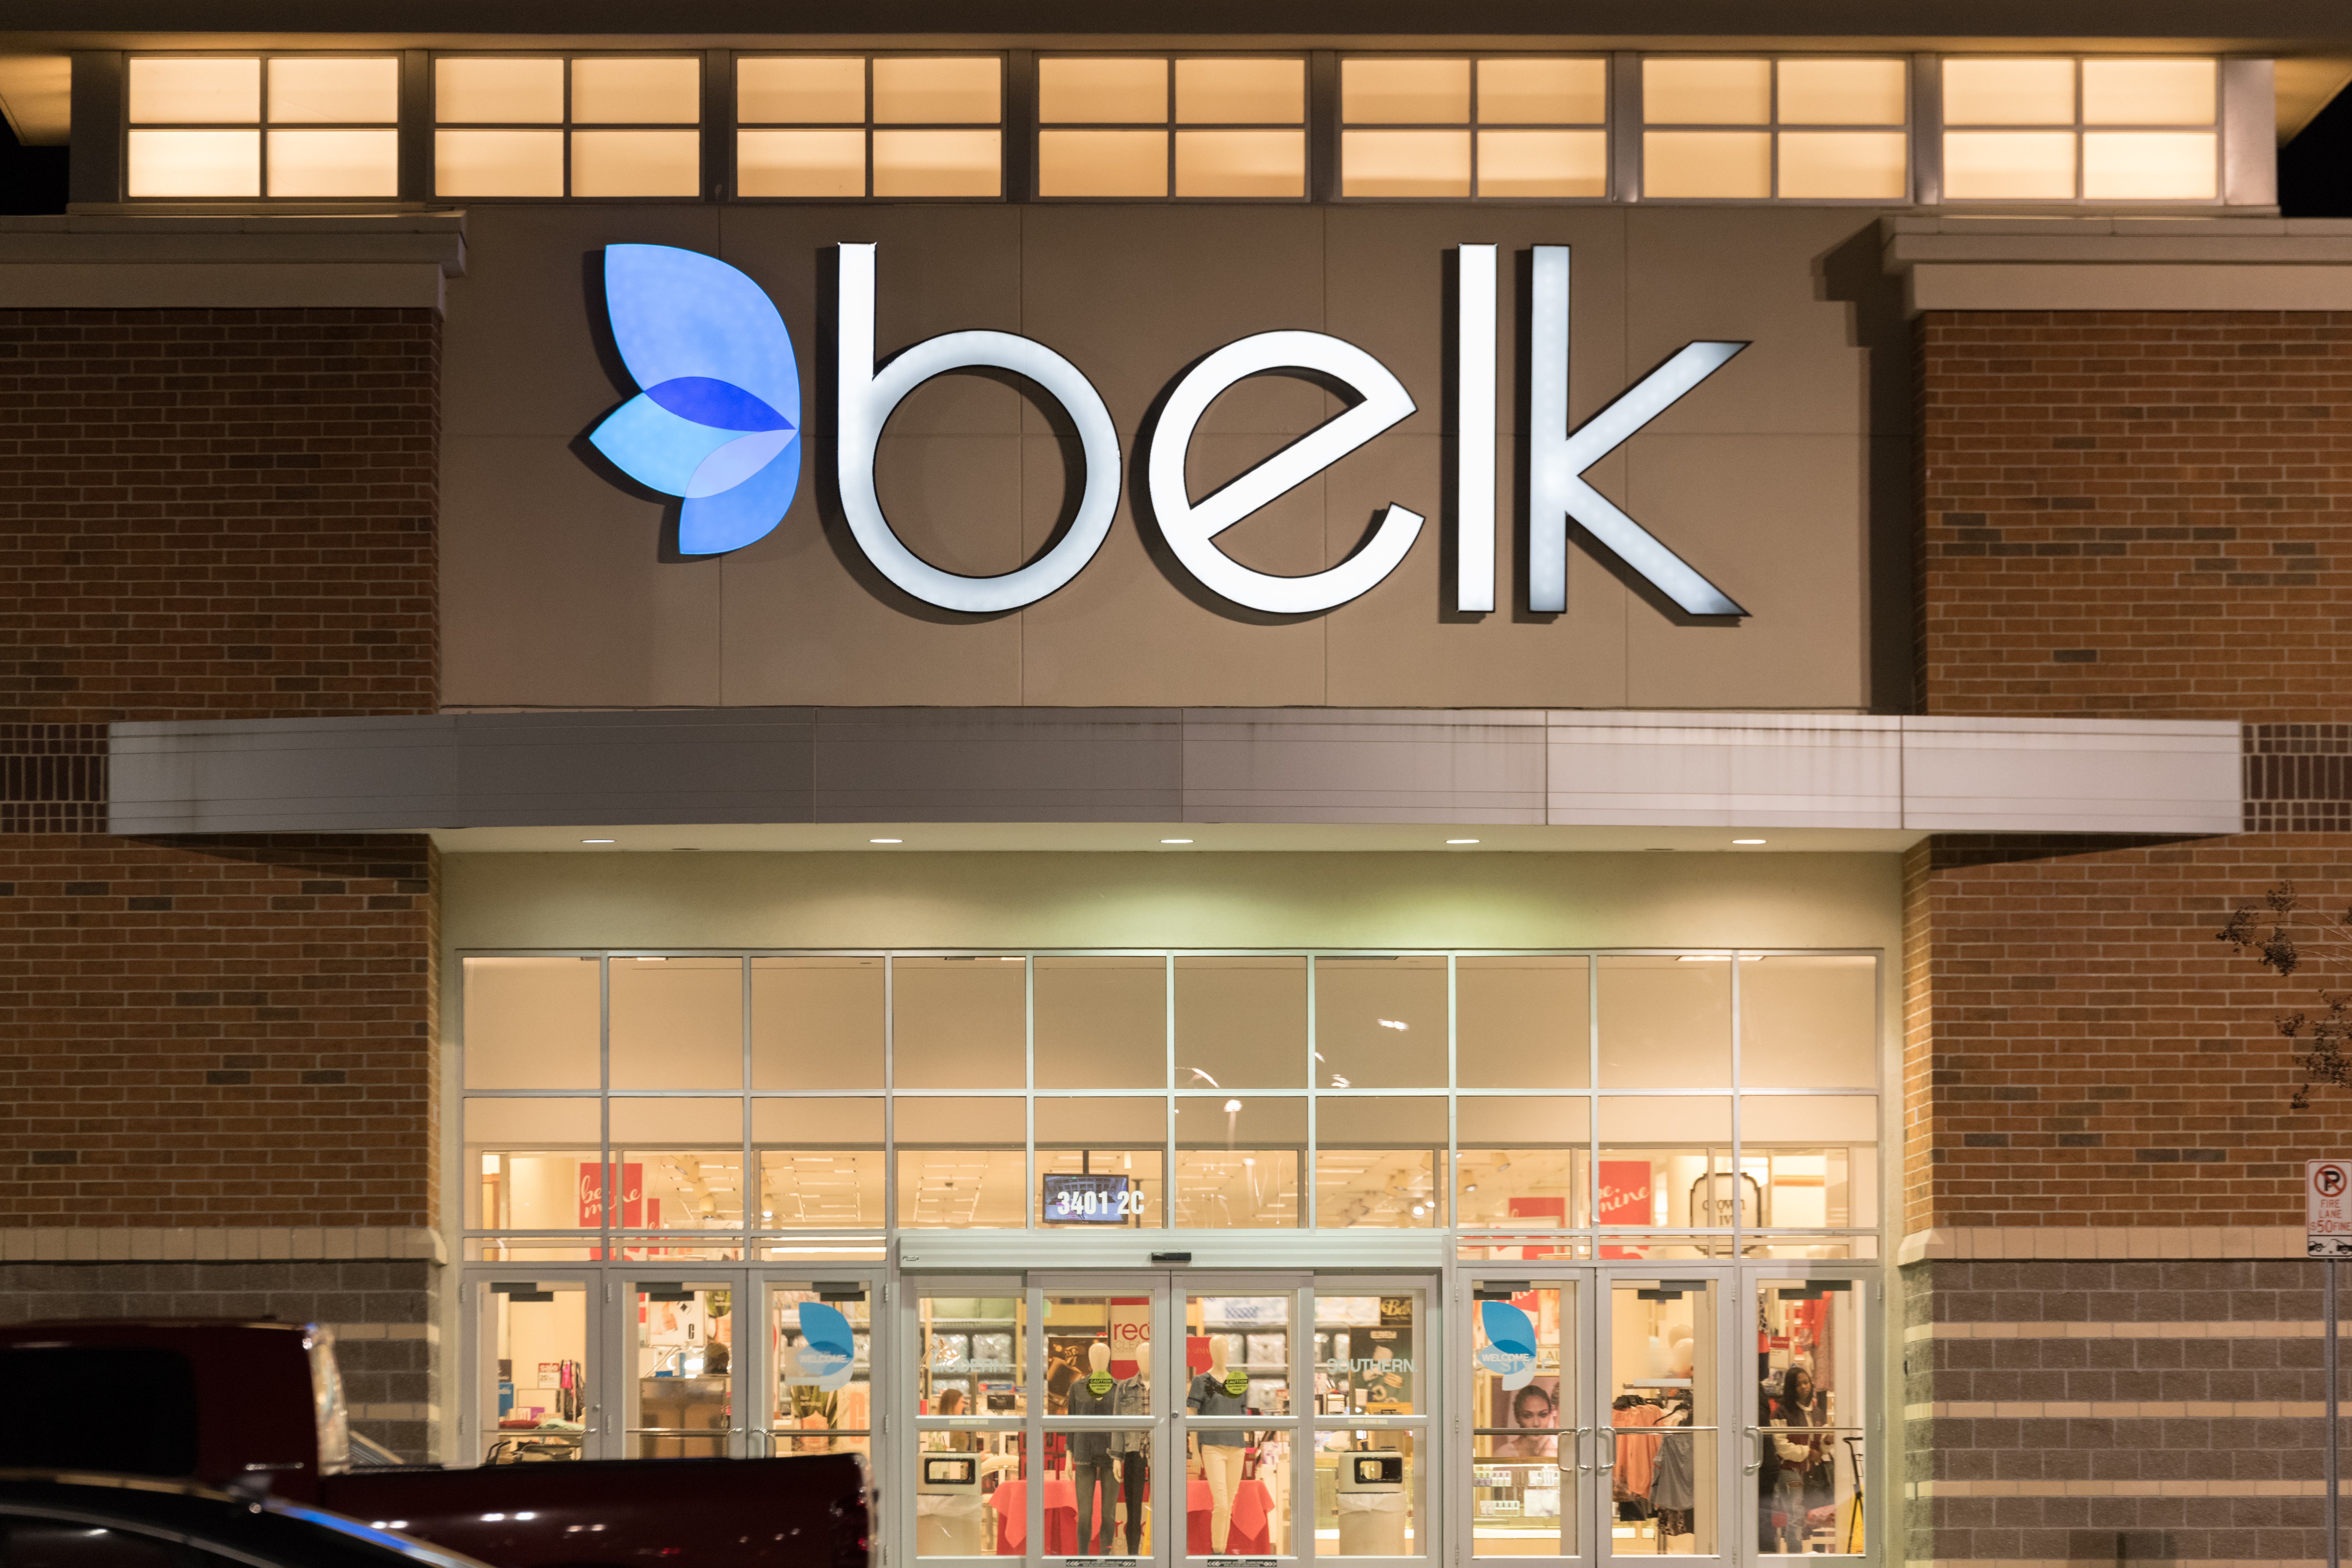 The best deals of Belk’s Black Friday in July sale